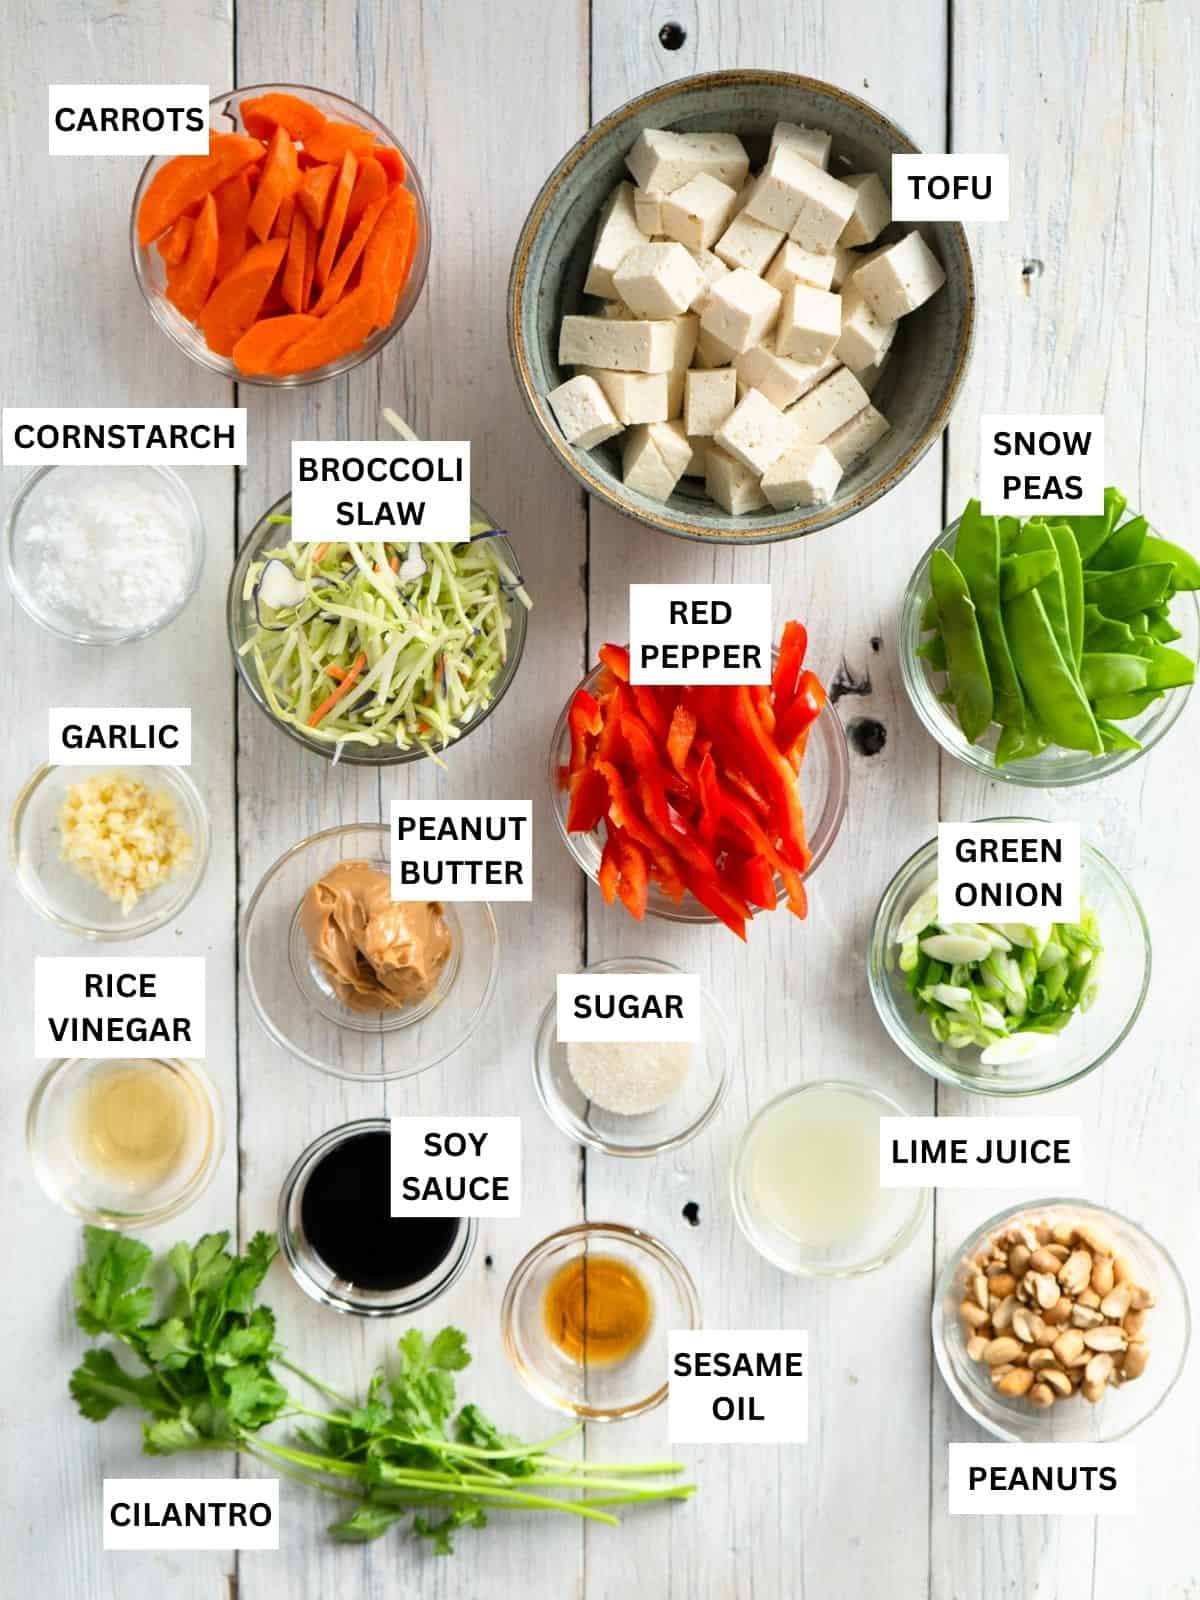 All labeled ingredients to make tofu stir fry.